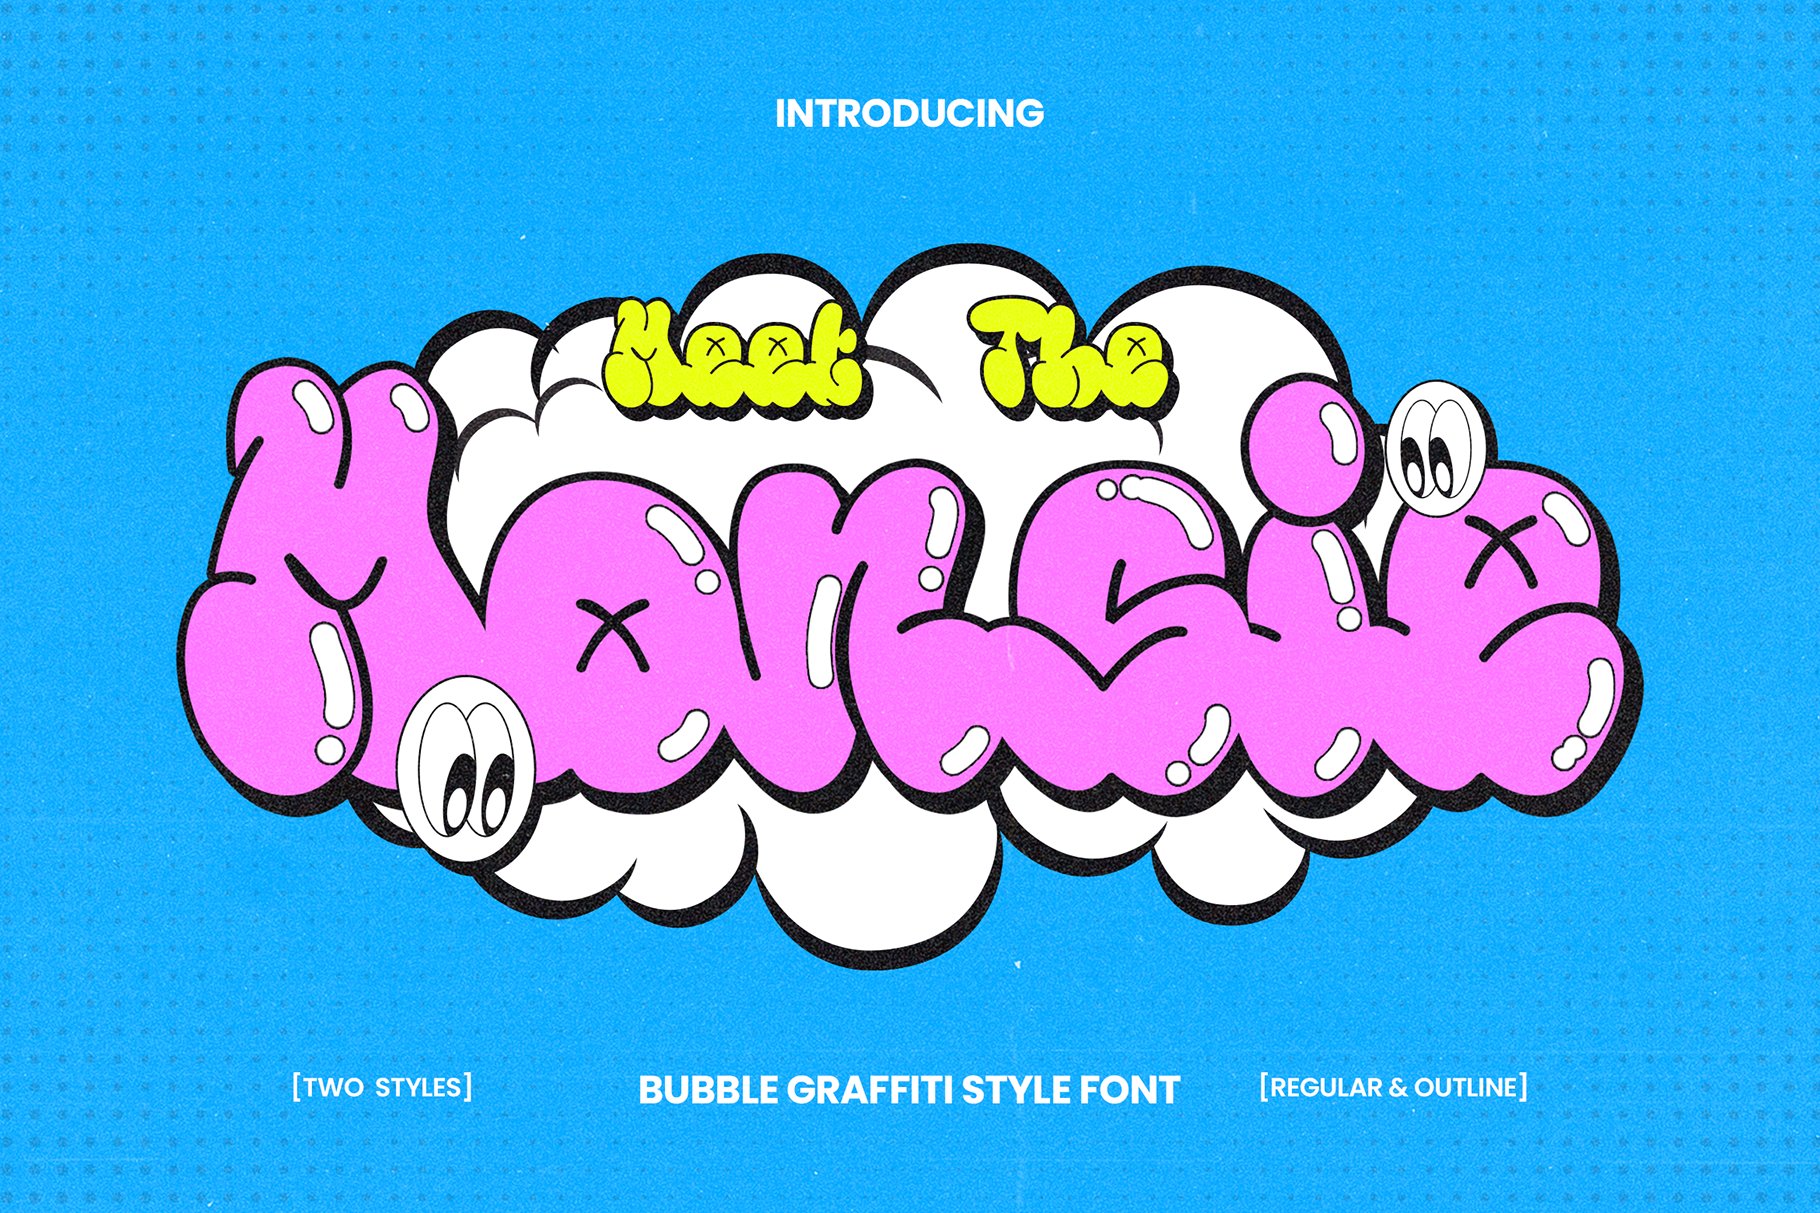 Monsie – Bubble Graffiti Font 创意趣味泡泡涂鸦字体 设计素材 第1张